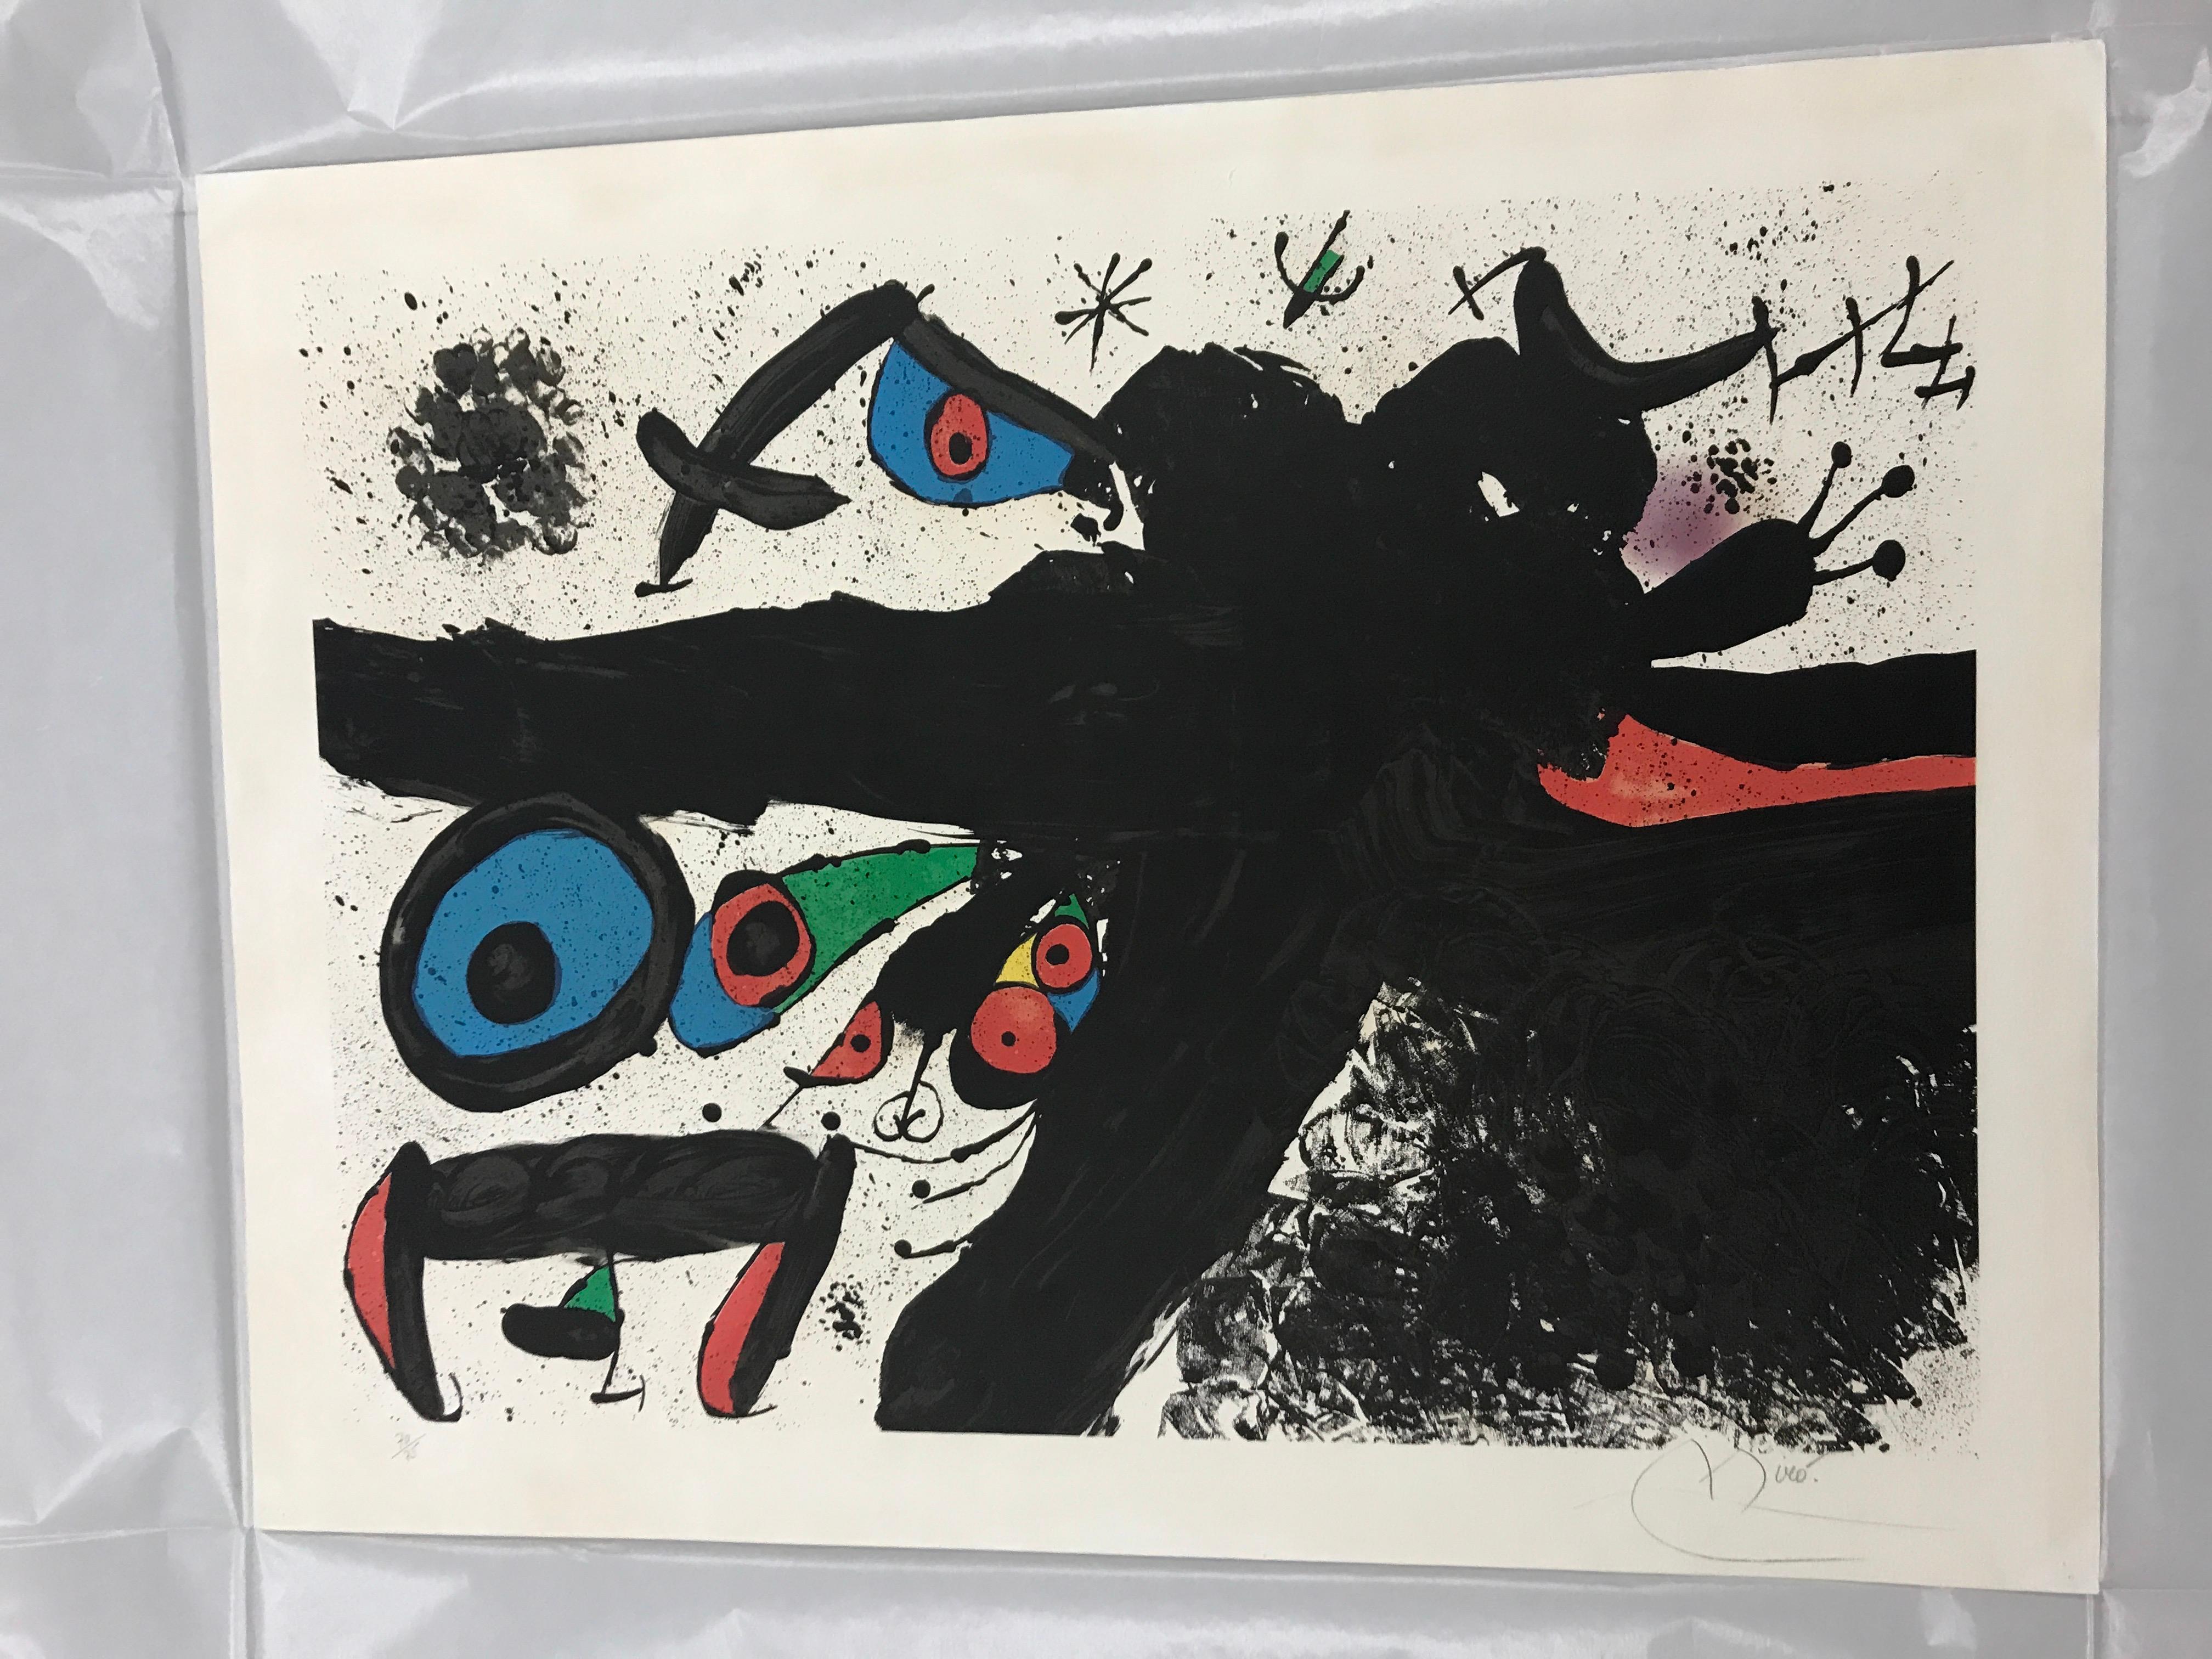 Homenatge à Joan Prats - Print by Joan Miró